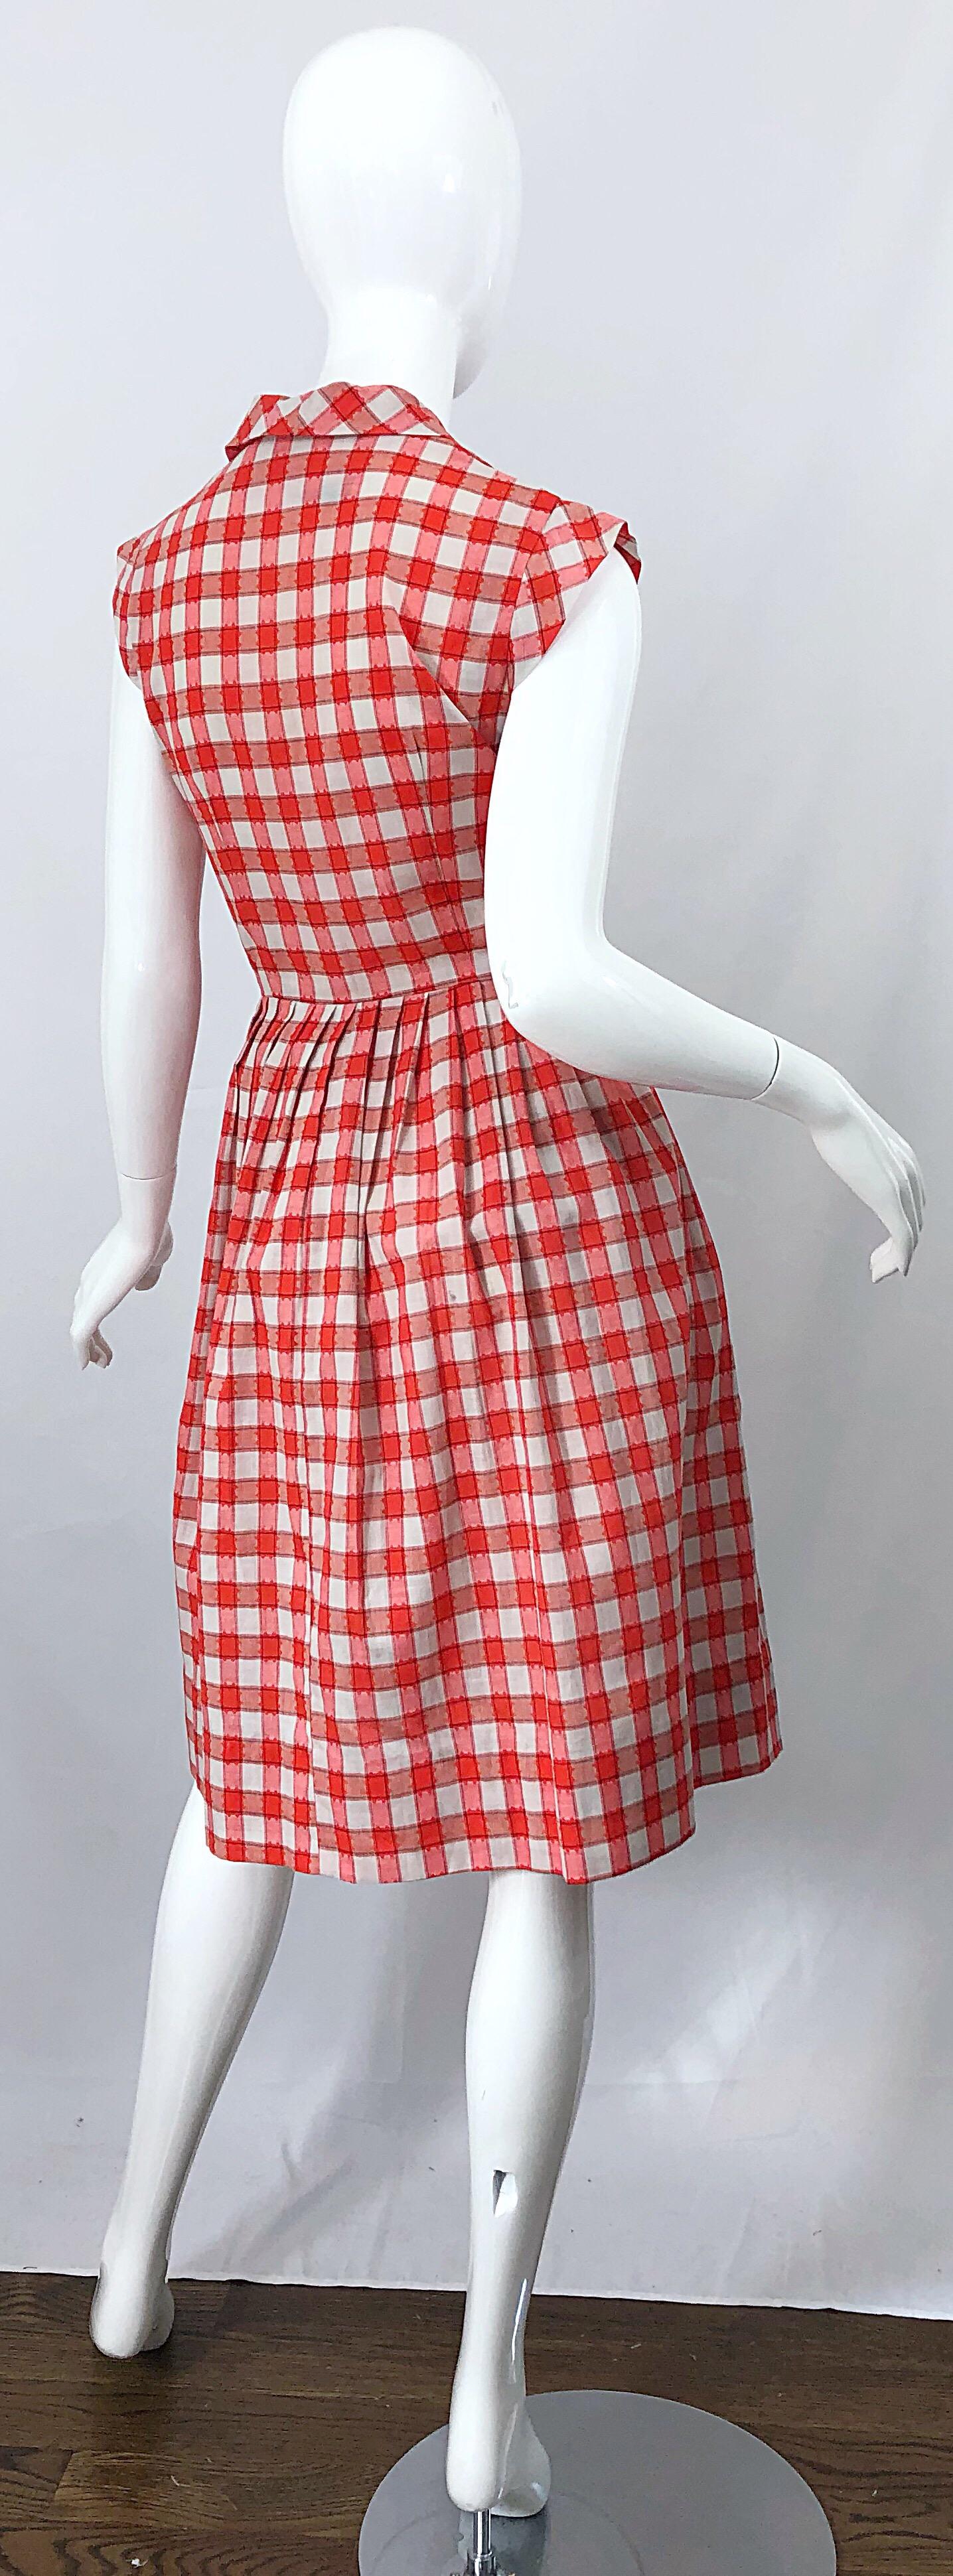 Rare 1950s Red + White Checkered Rhinestone Vintage 50s Cotton Dress 7